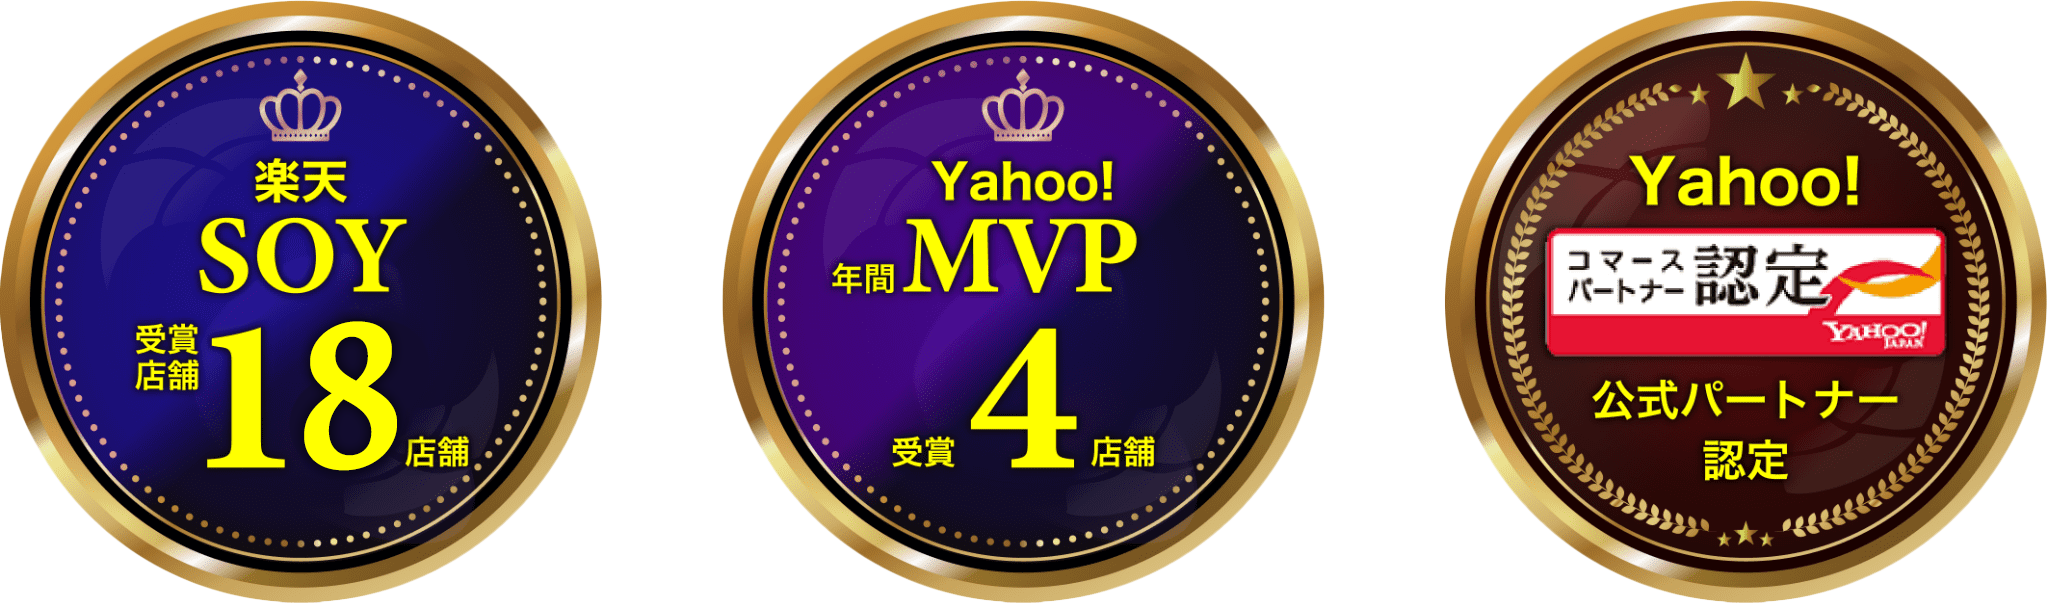 楽天SOY受賞店舗18店舗 Yahoo!年間MVP受賞4店舗 Yahoo!公式パートナー認定